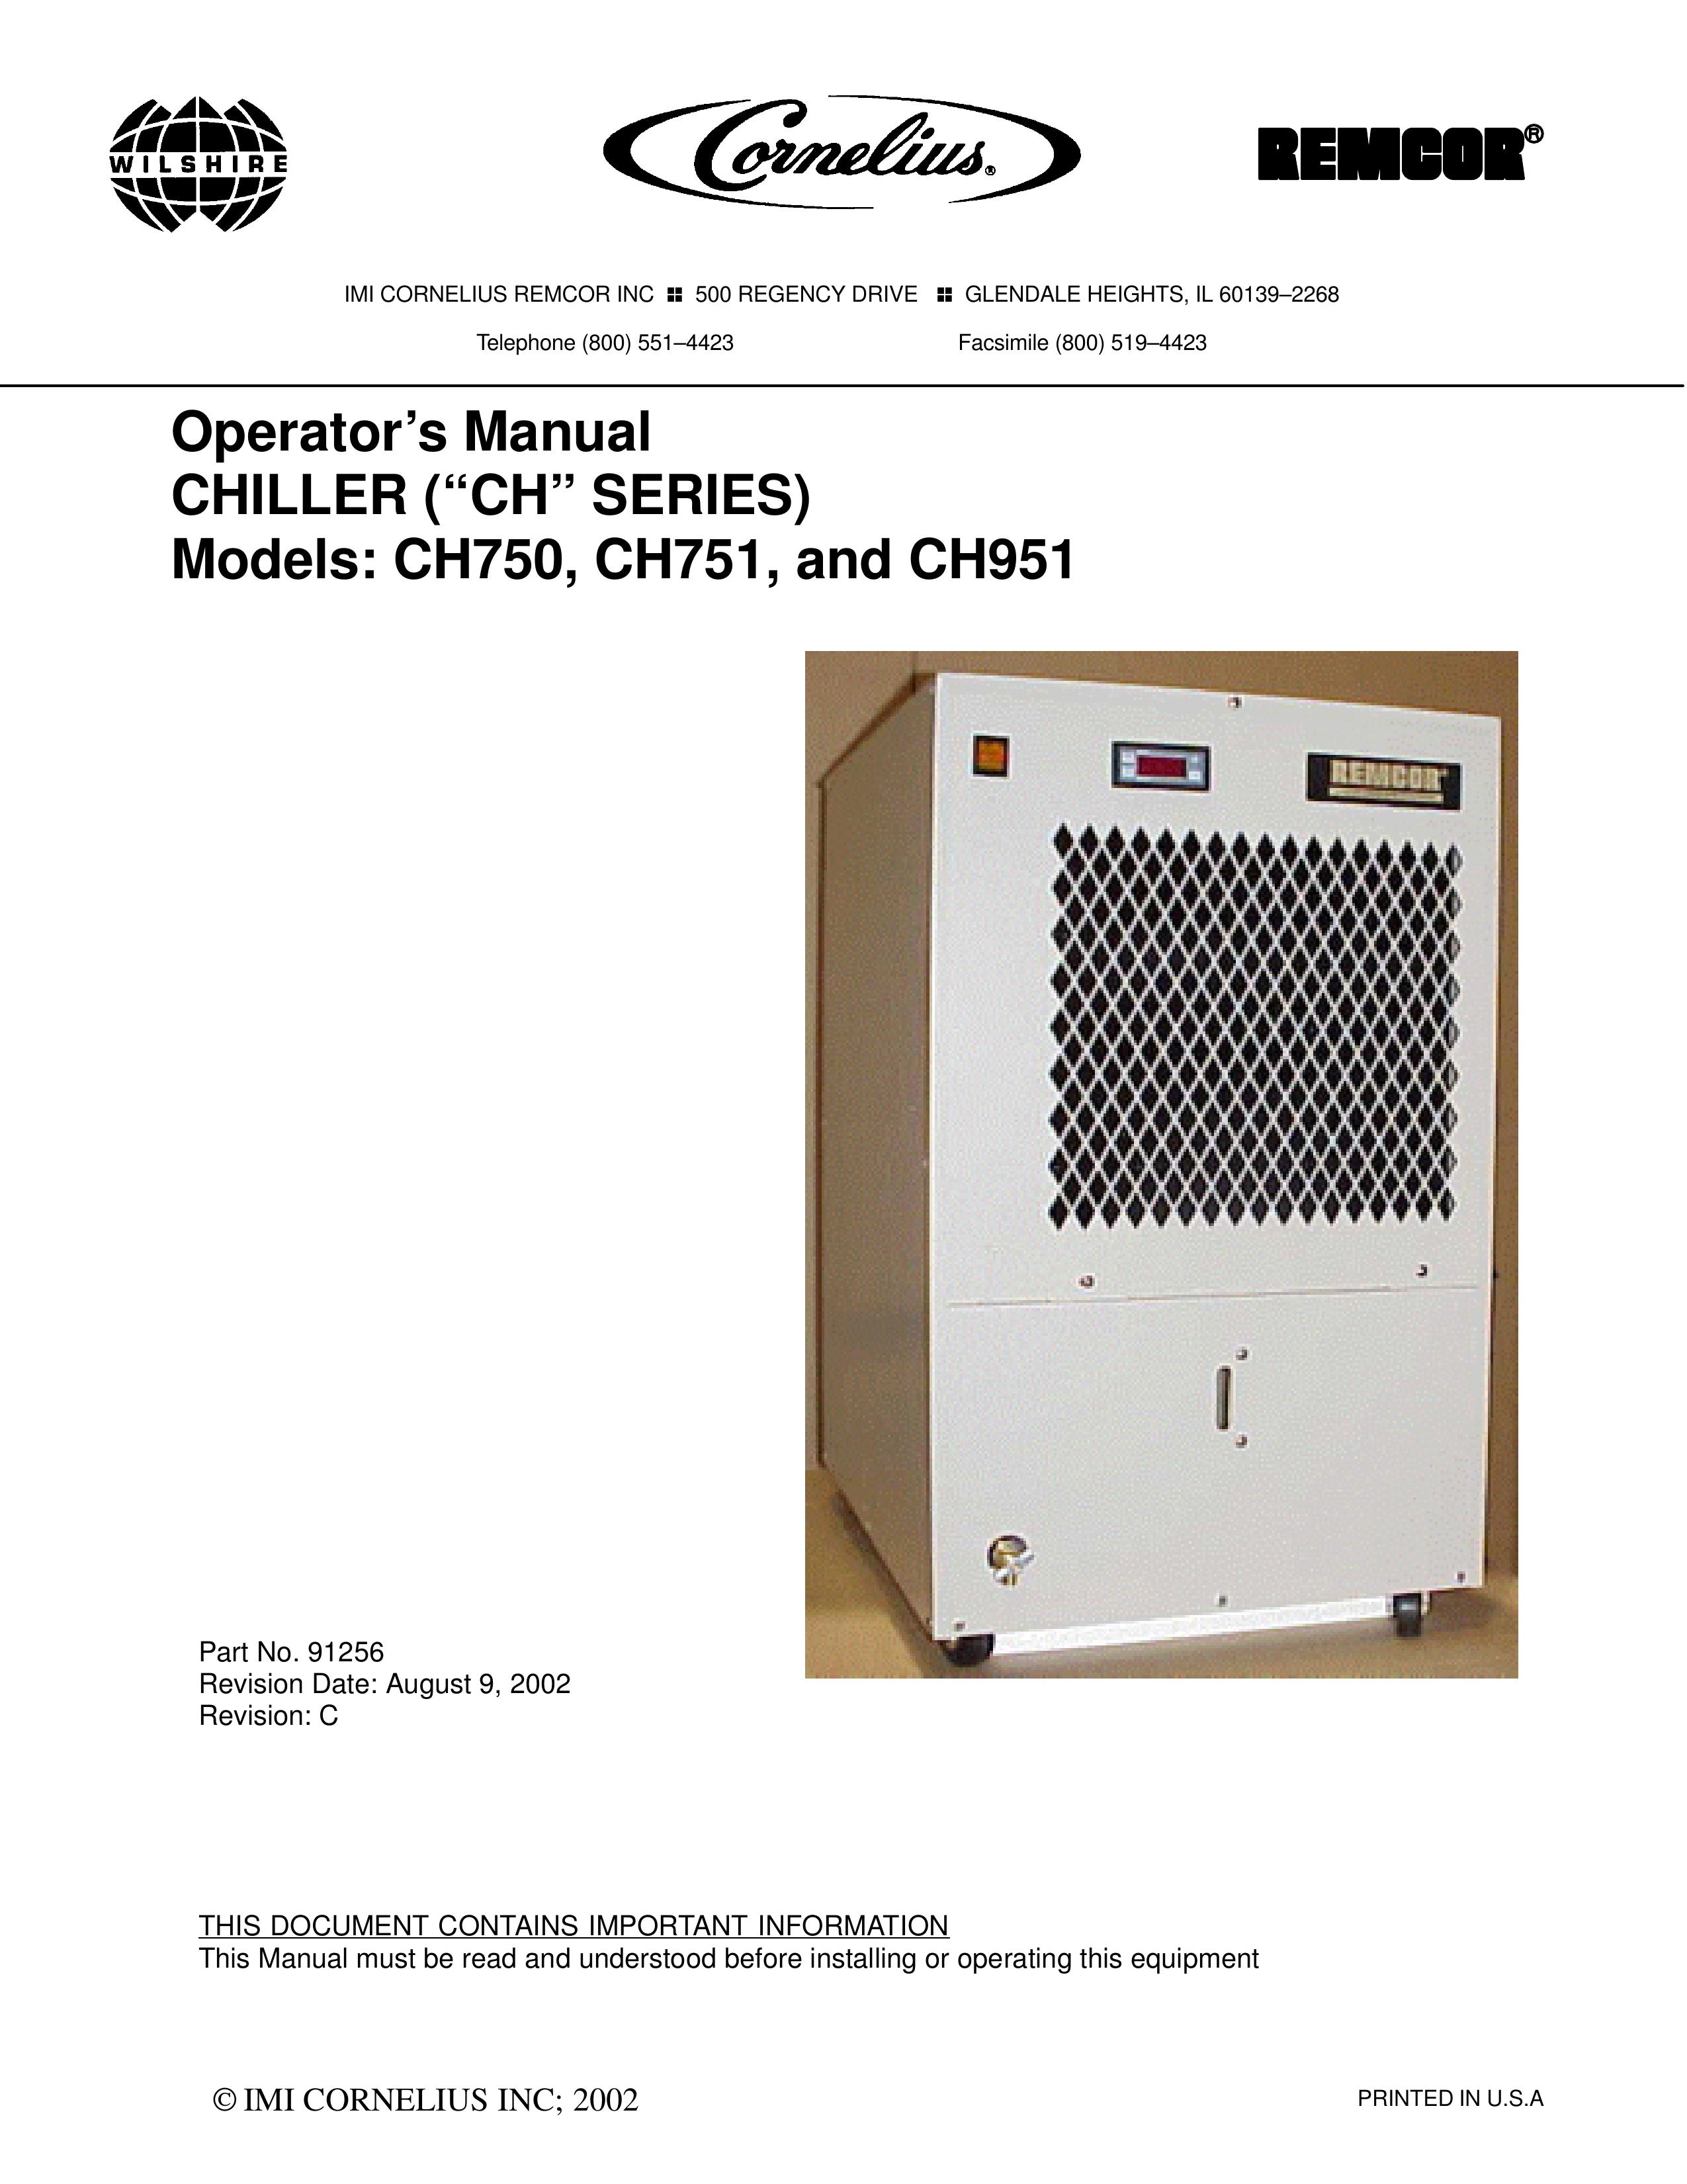 Cornelius CH750 Refrigerator User Manual